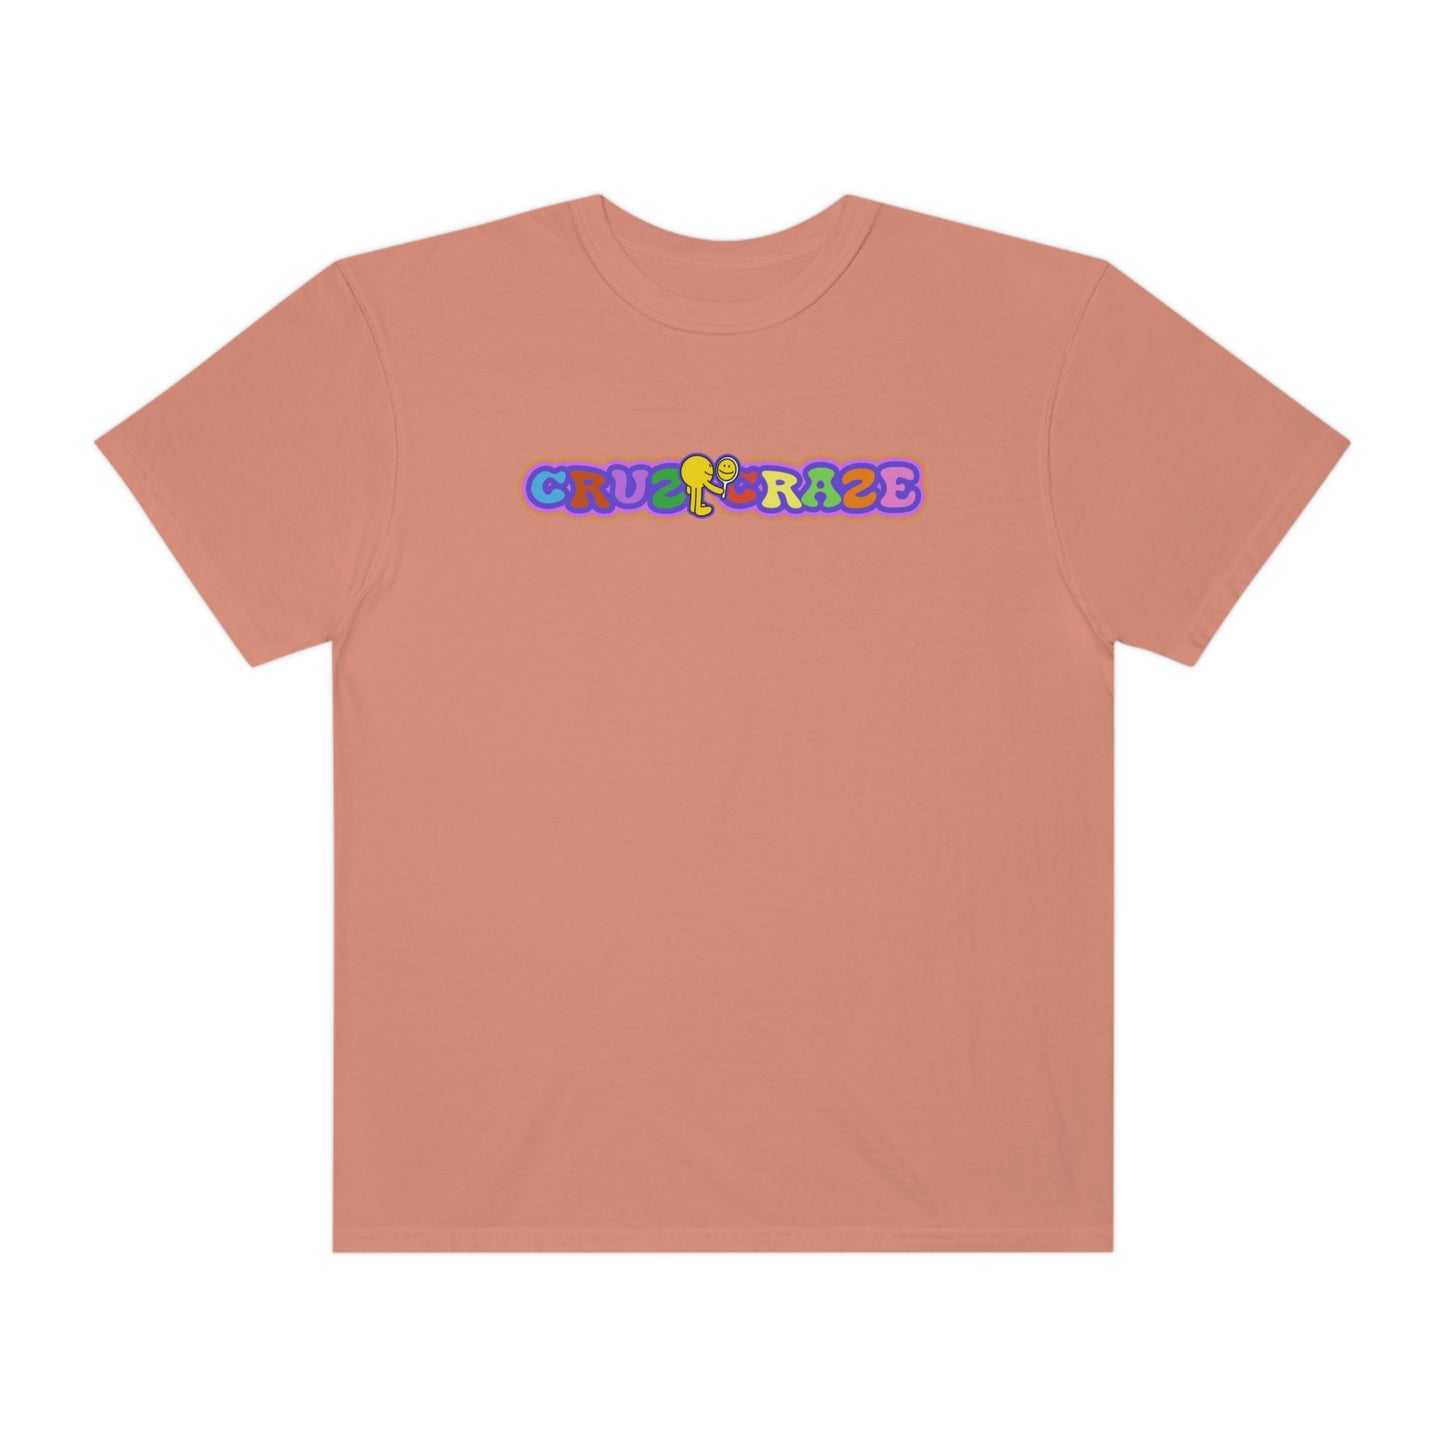 Unisex Garment-Dyed T-shirt (US) Customers